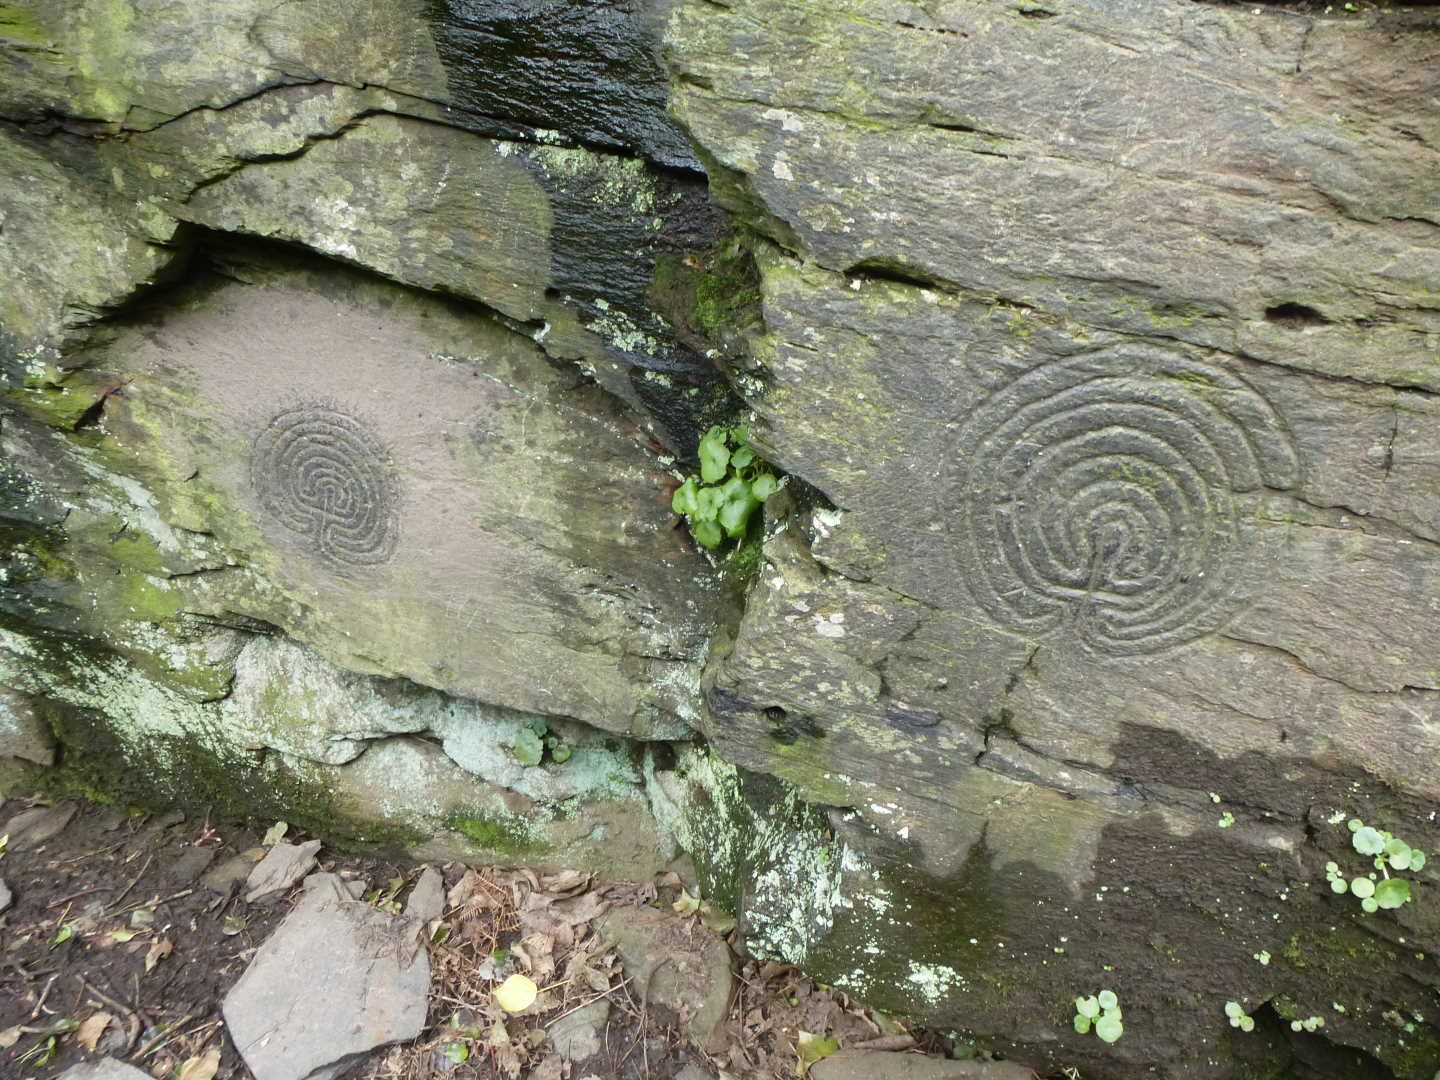 A photo of a circular rock carving